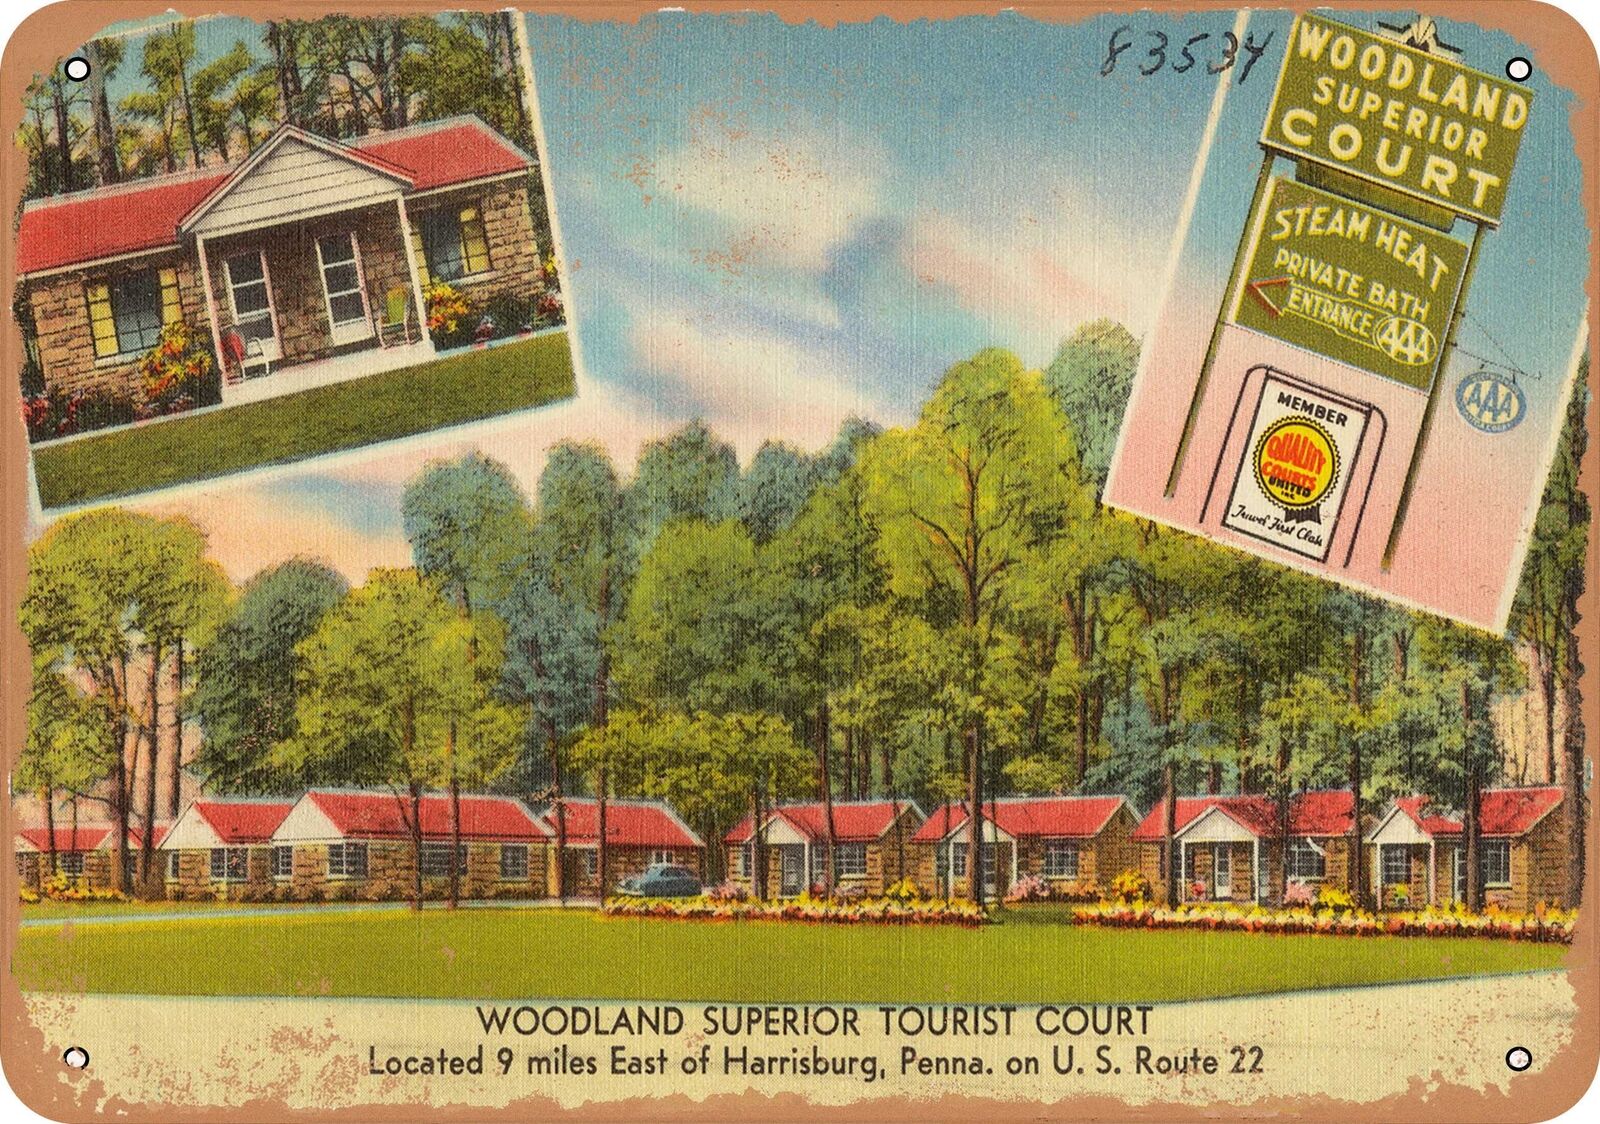 Metal Sign - Pennsylvania Postcard - Woodland Superior Tourist Court, located 9